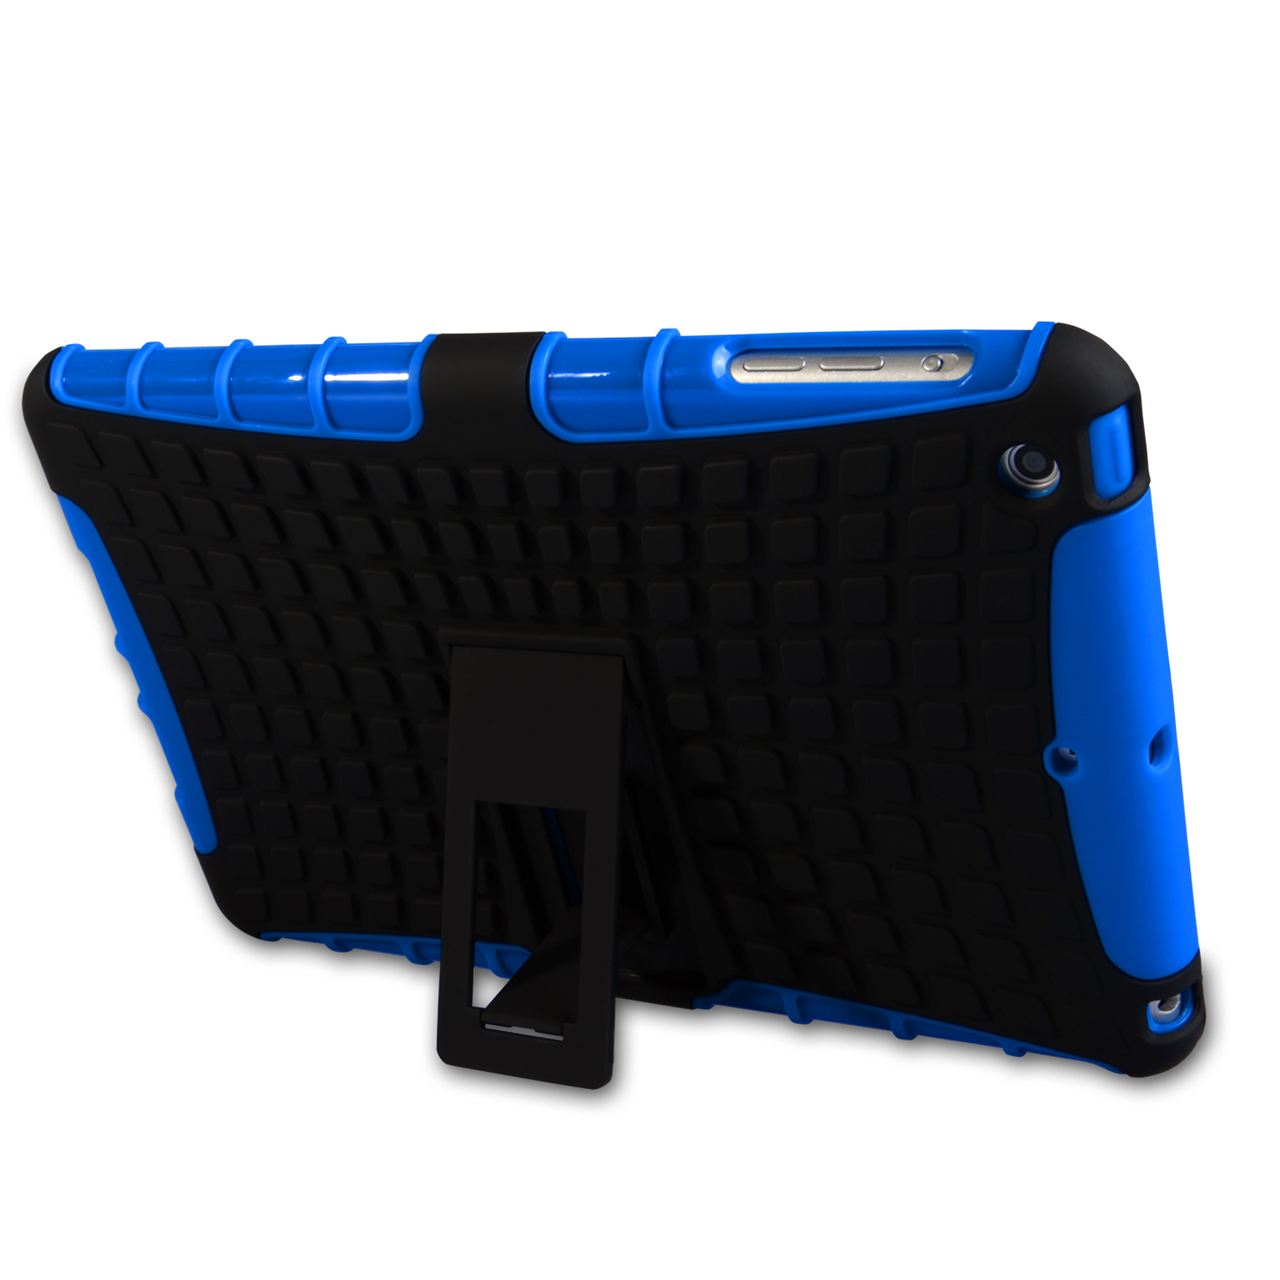 Caseflex iPad Mini 2 Tough Stand Cover - Blue